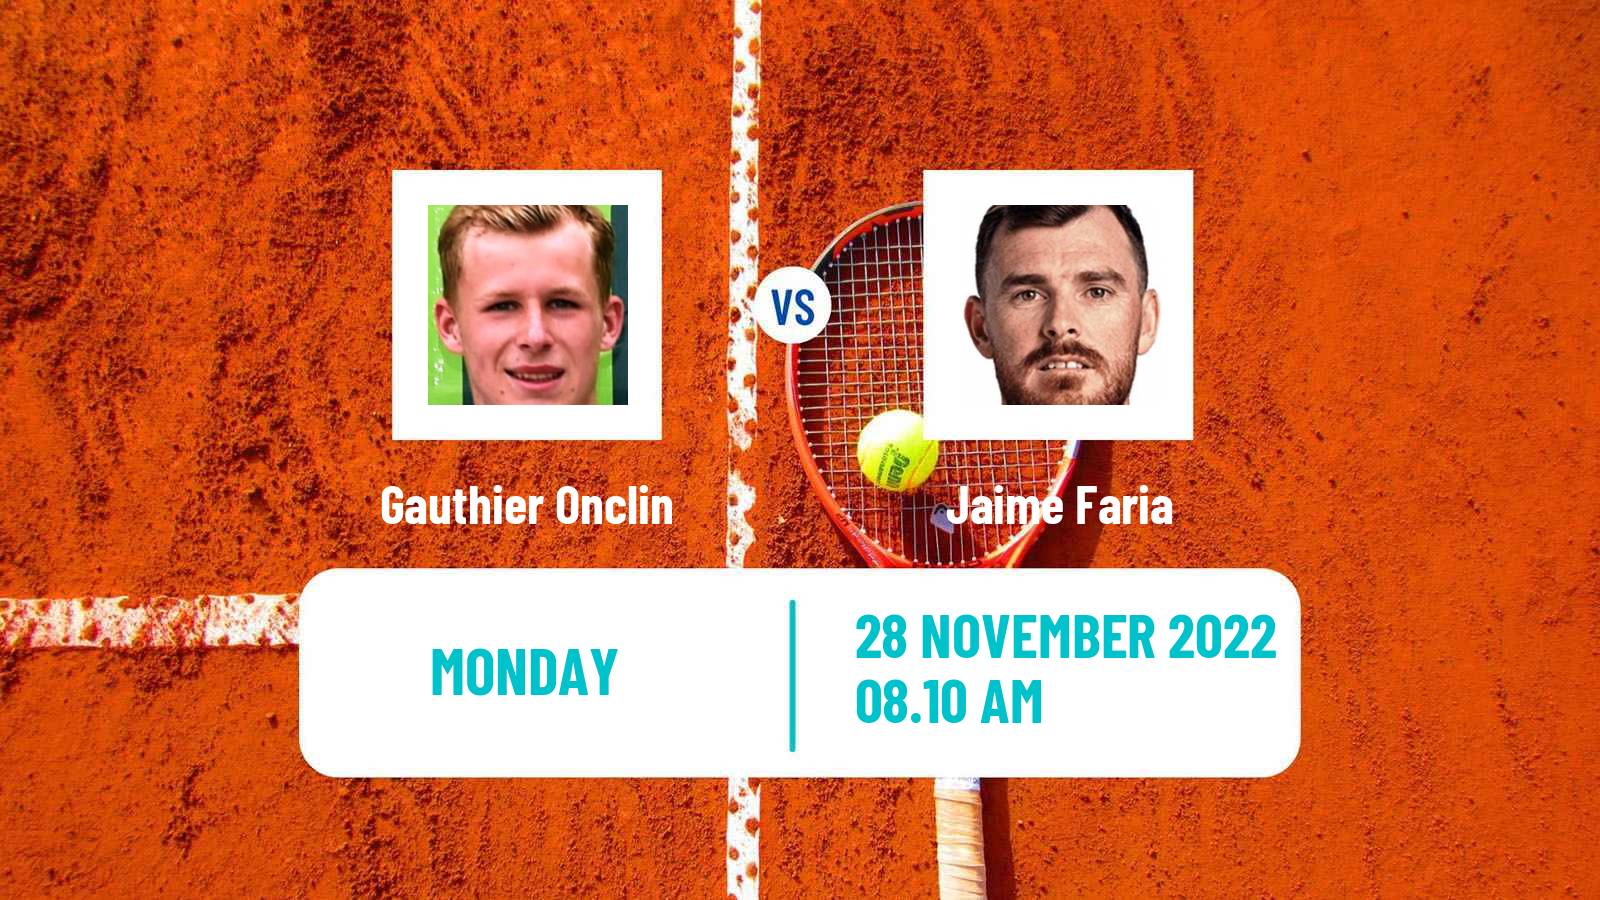 Tennis ATP Challenger Gauthier Onclin - Jaime Faria